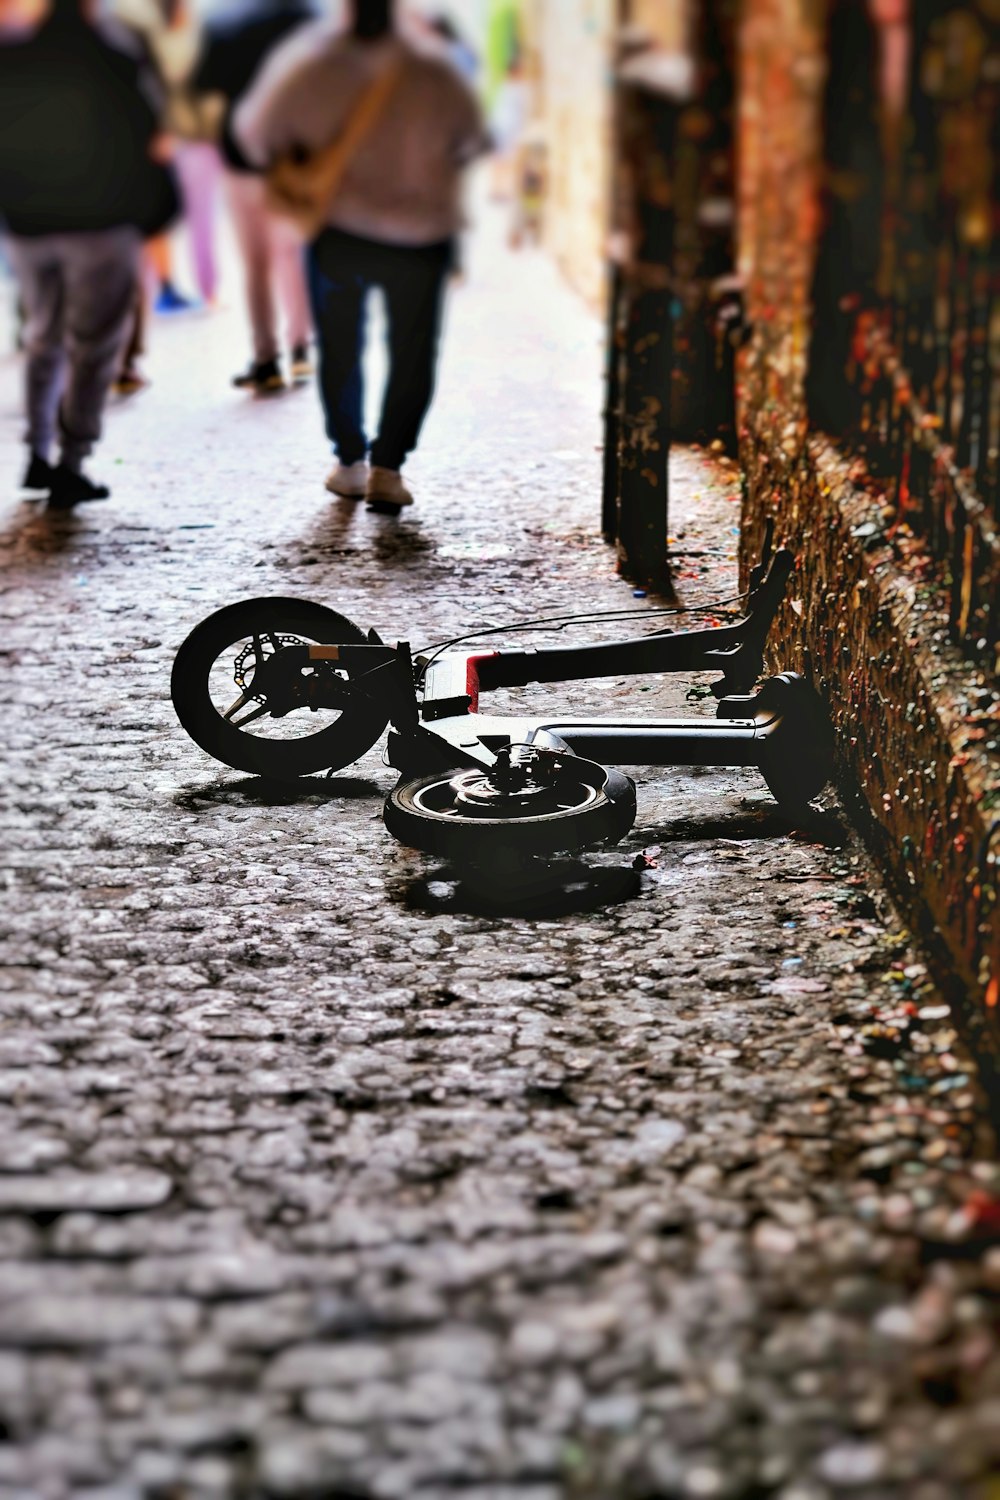 Una bici rotta che giace a terra in mezzo a una strada